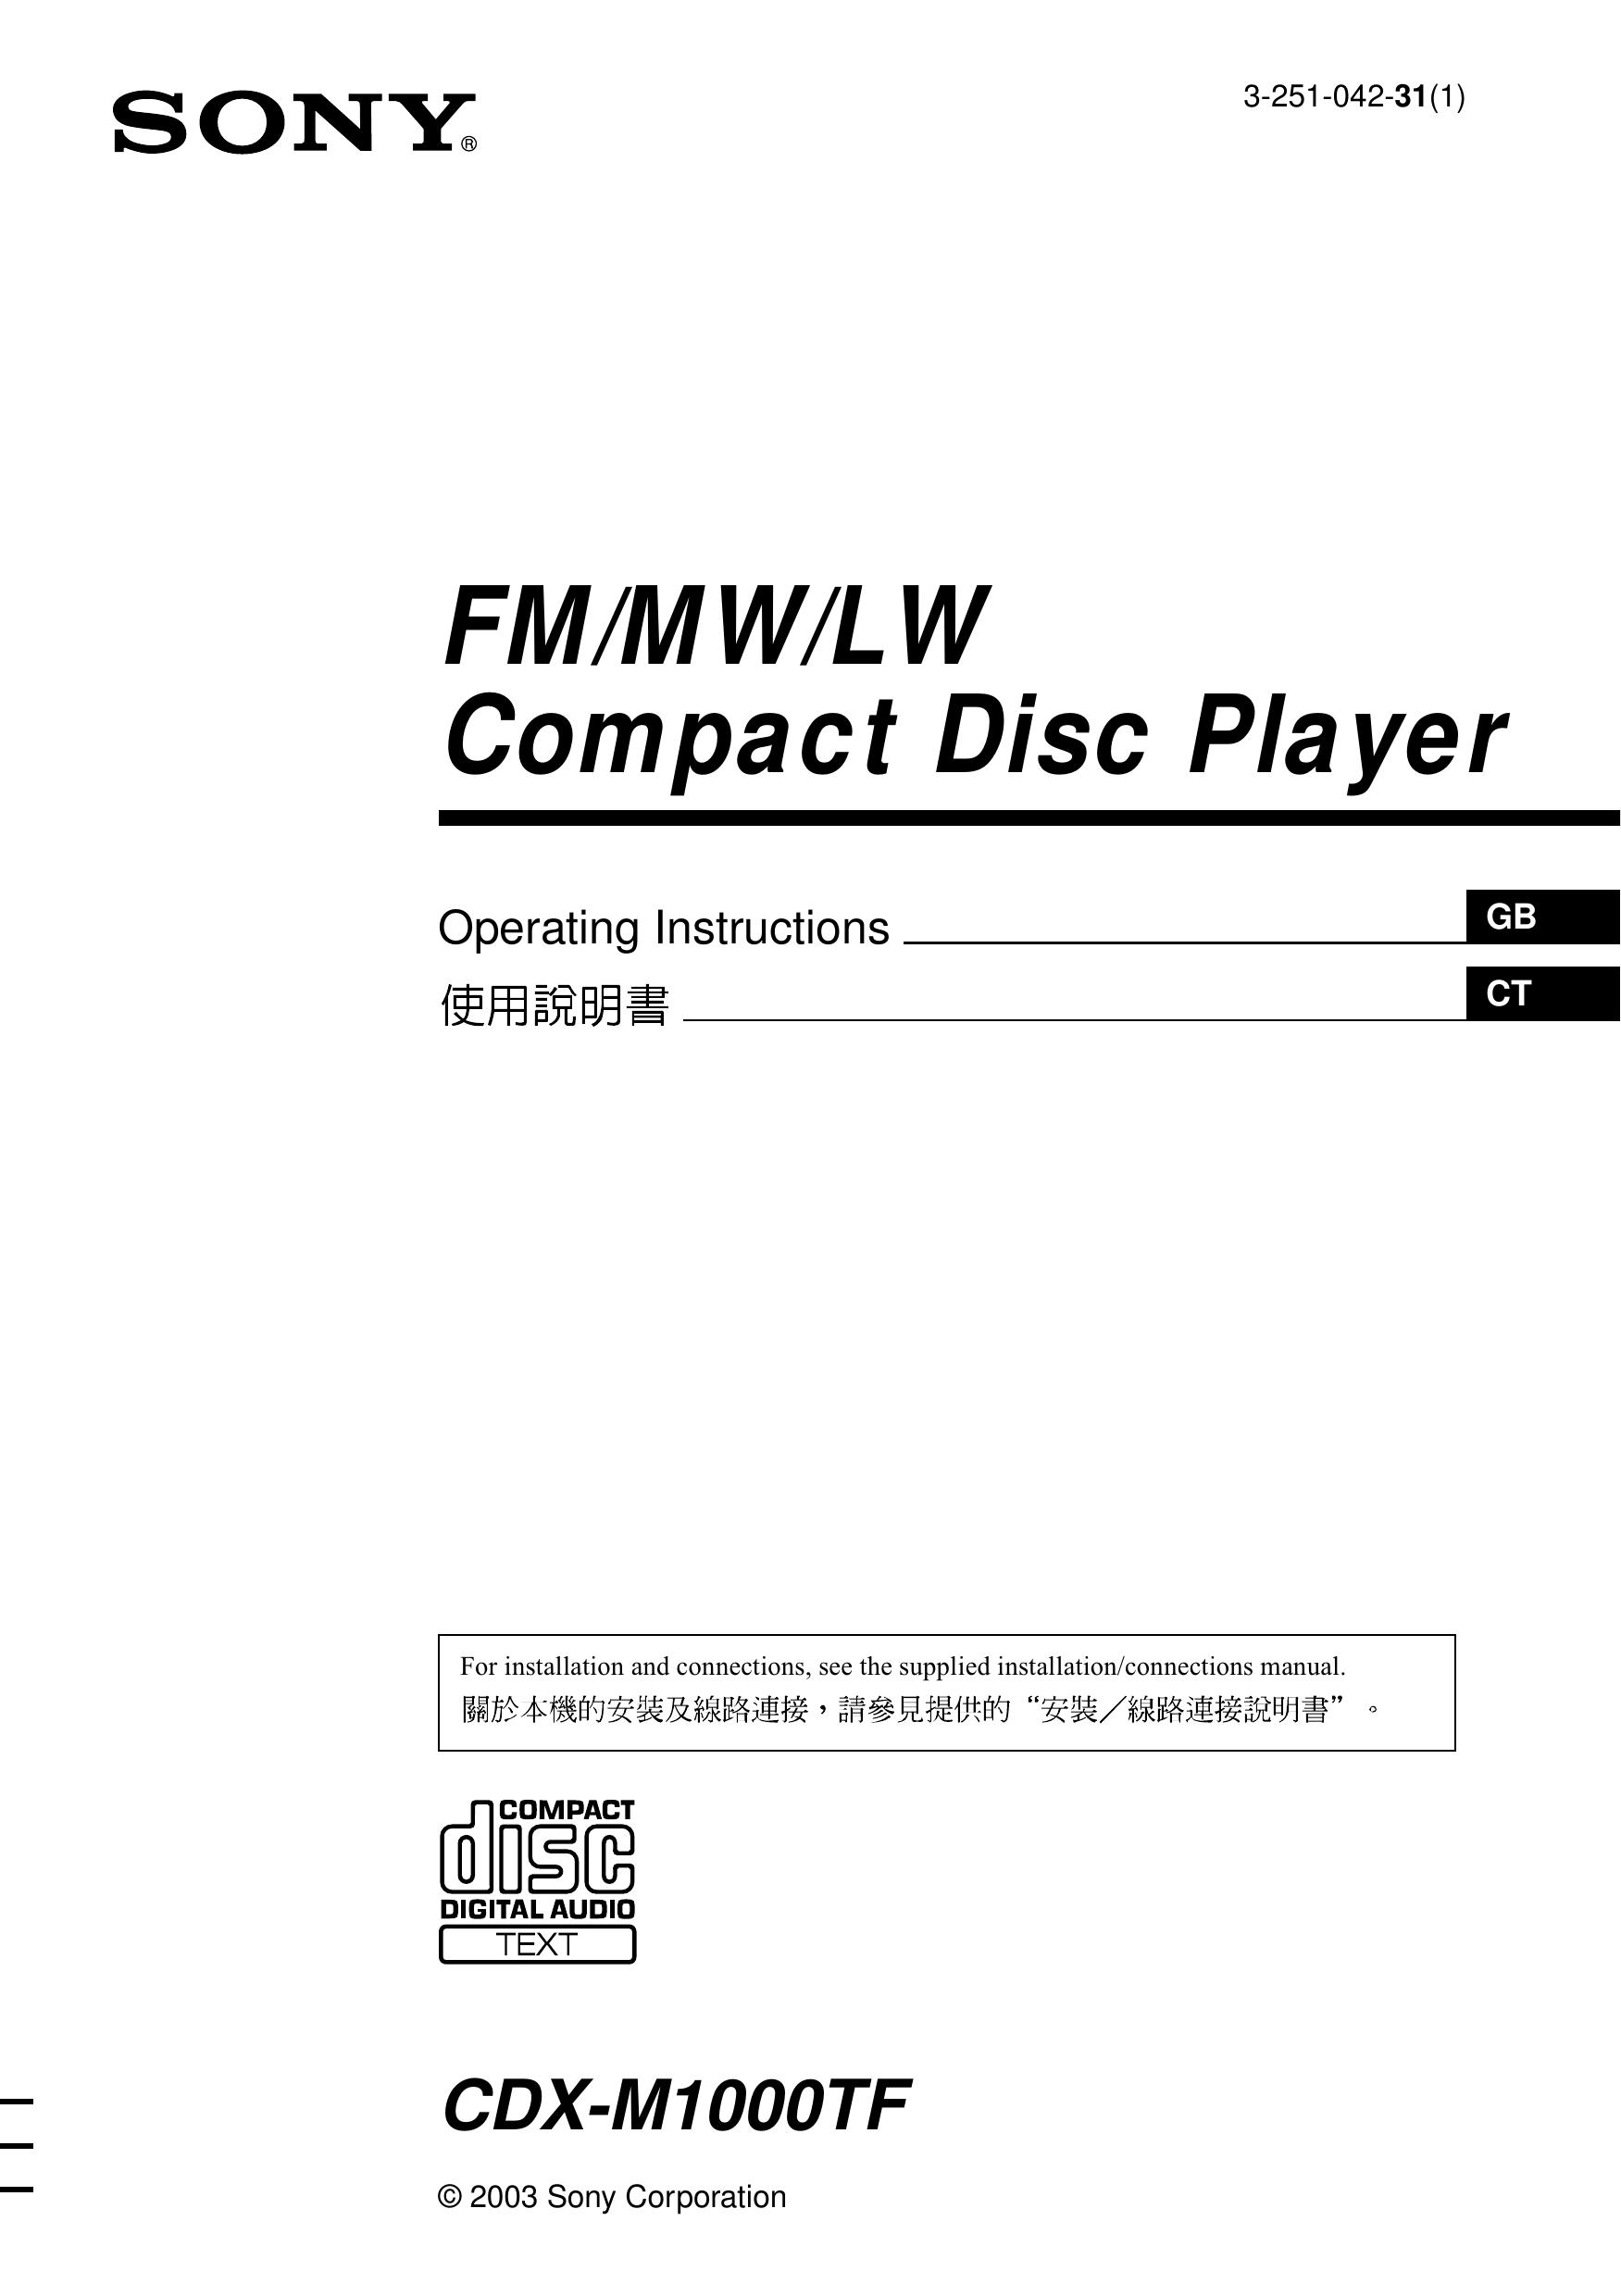 Sony CDX-M1000TF Clock Radio User Manual